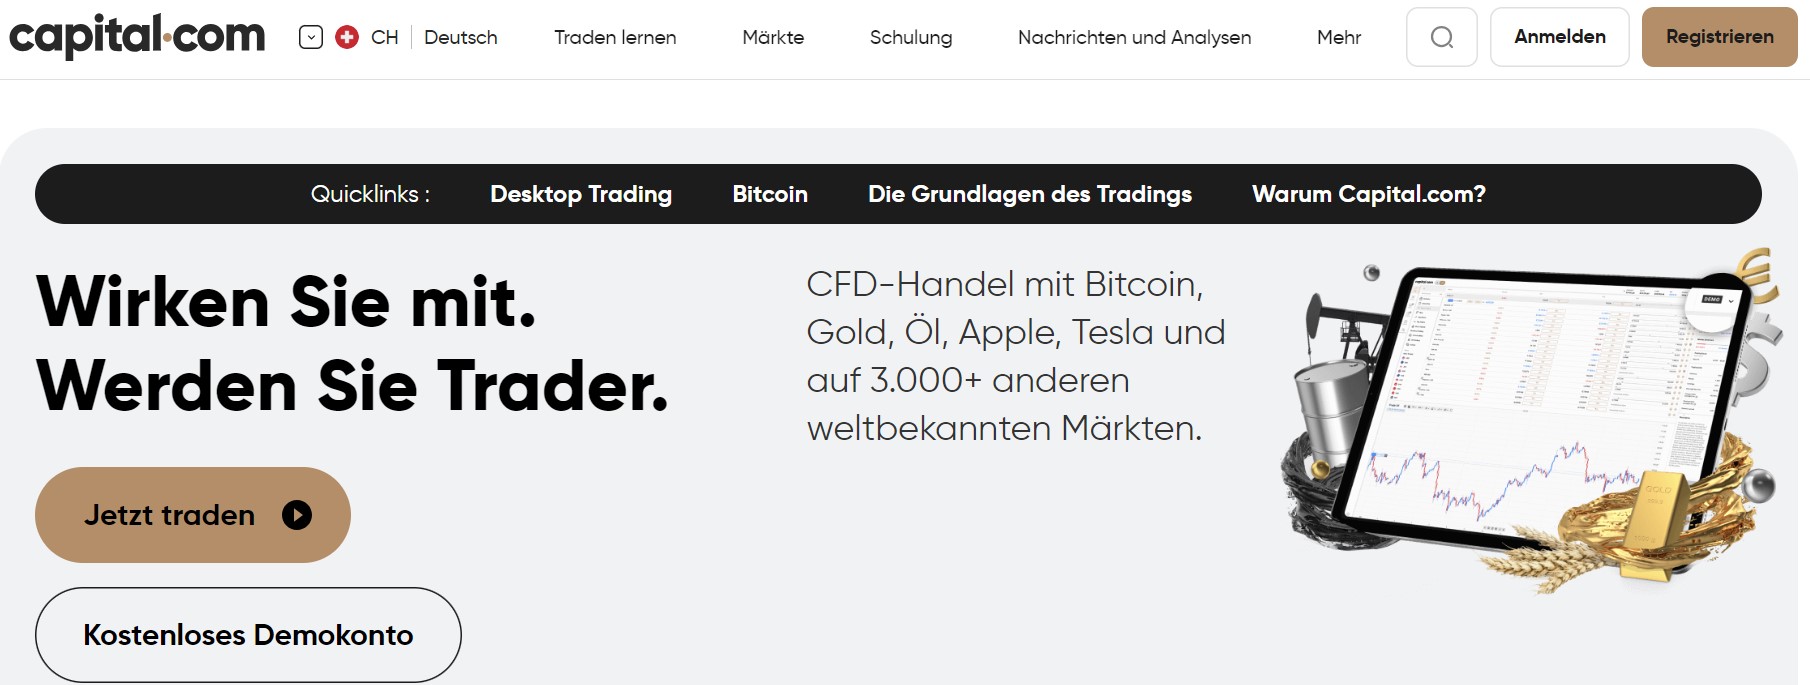 Capital.com Webseite deutsch 